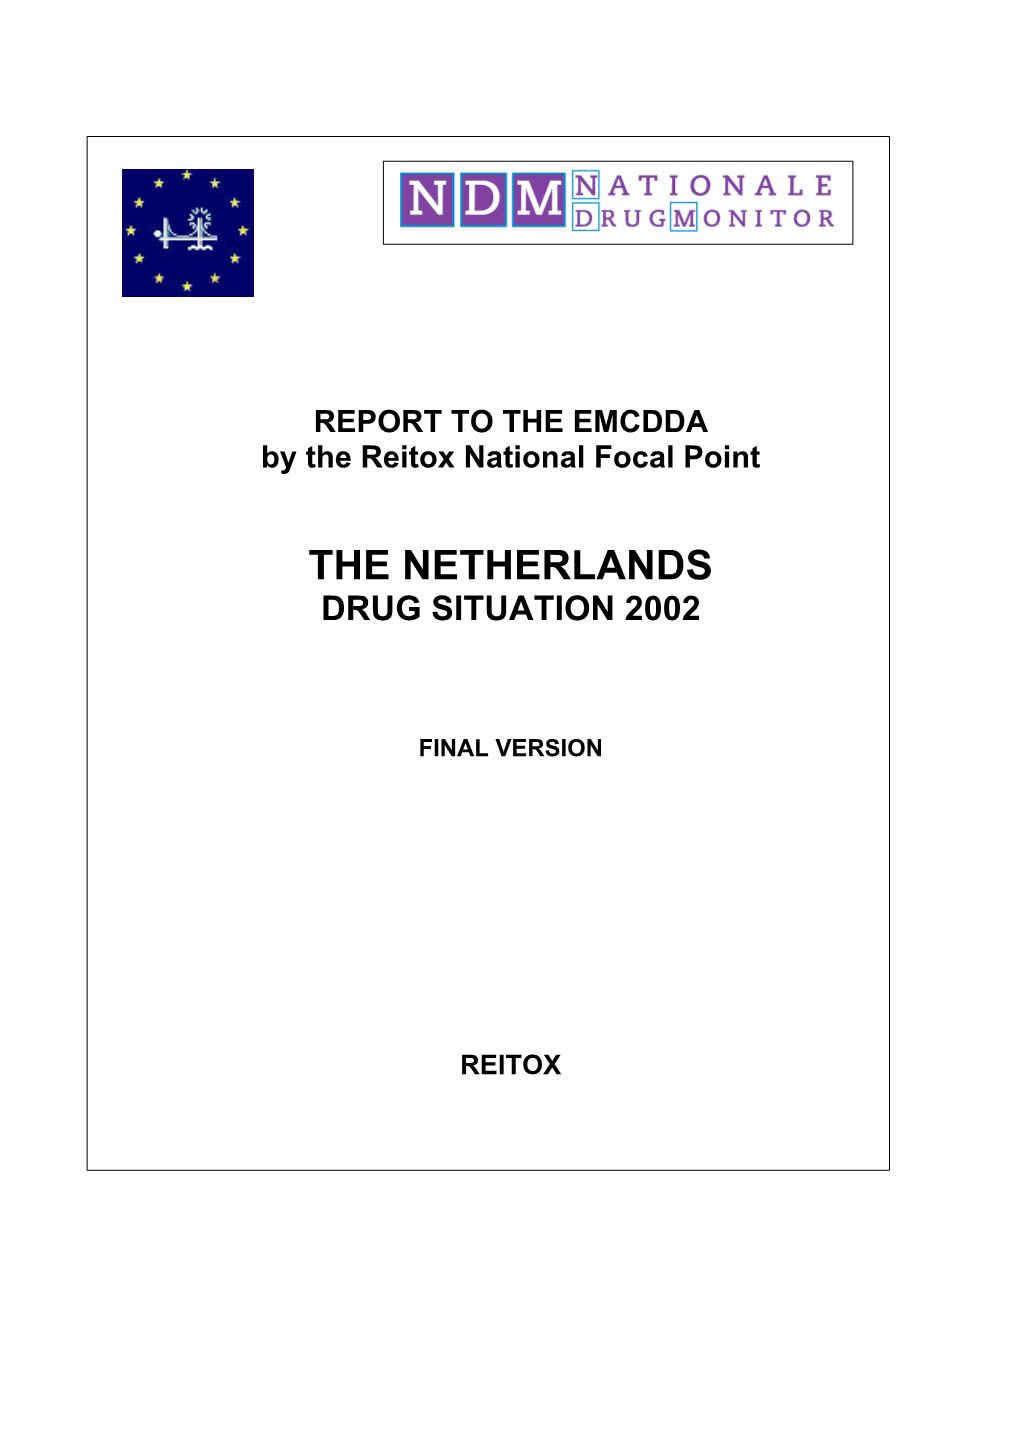 The Netherlands Drug Situation 2002